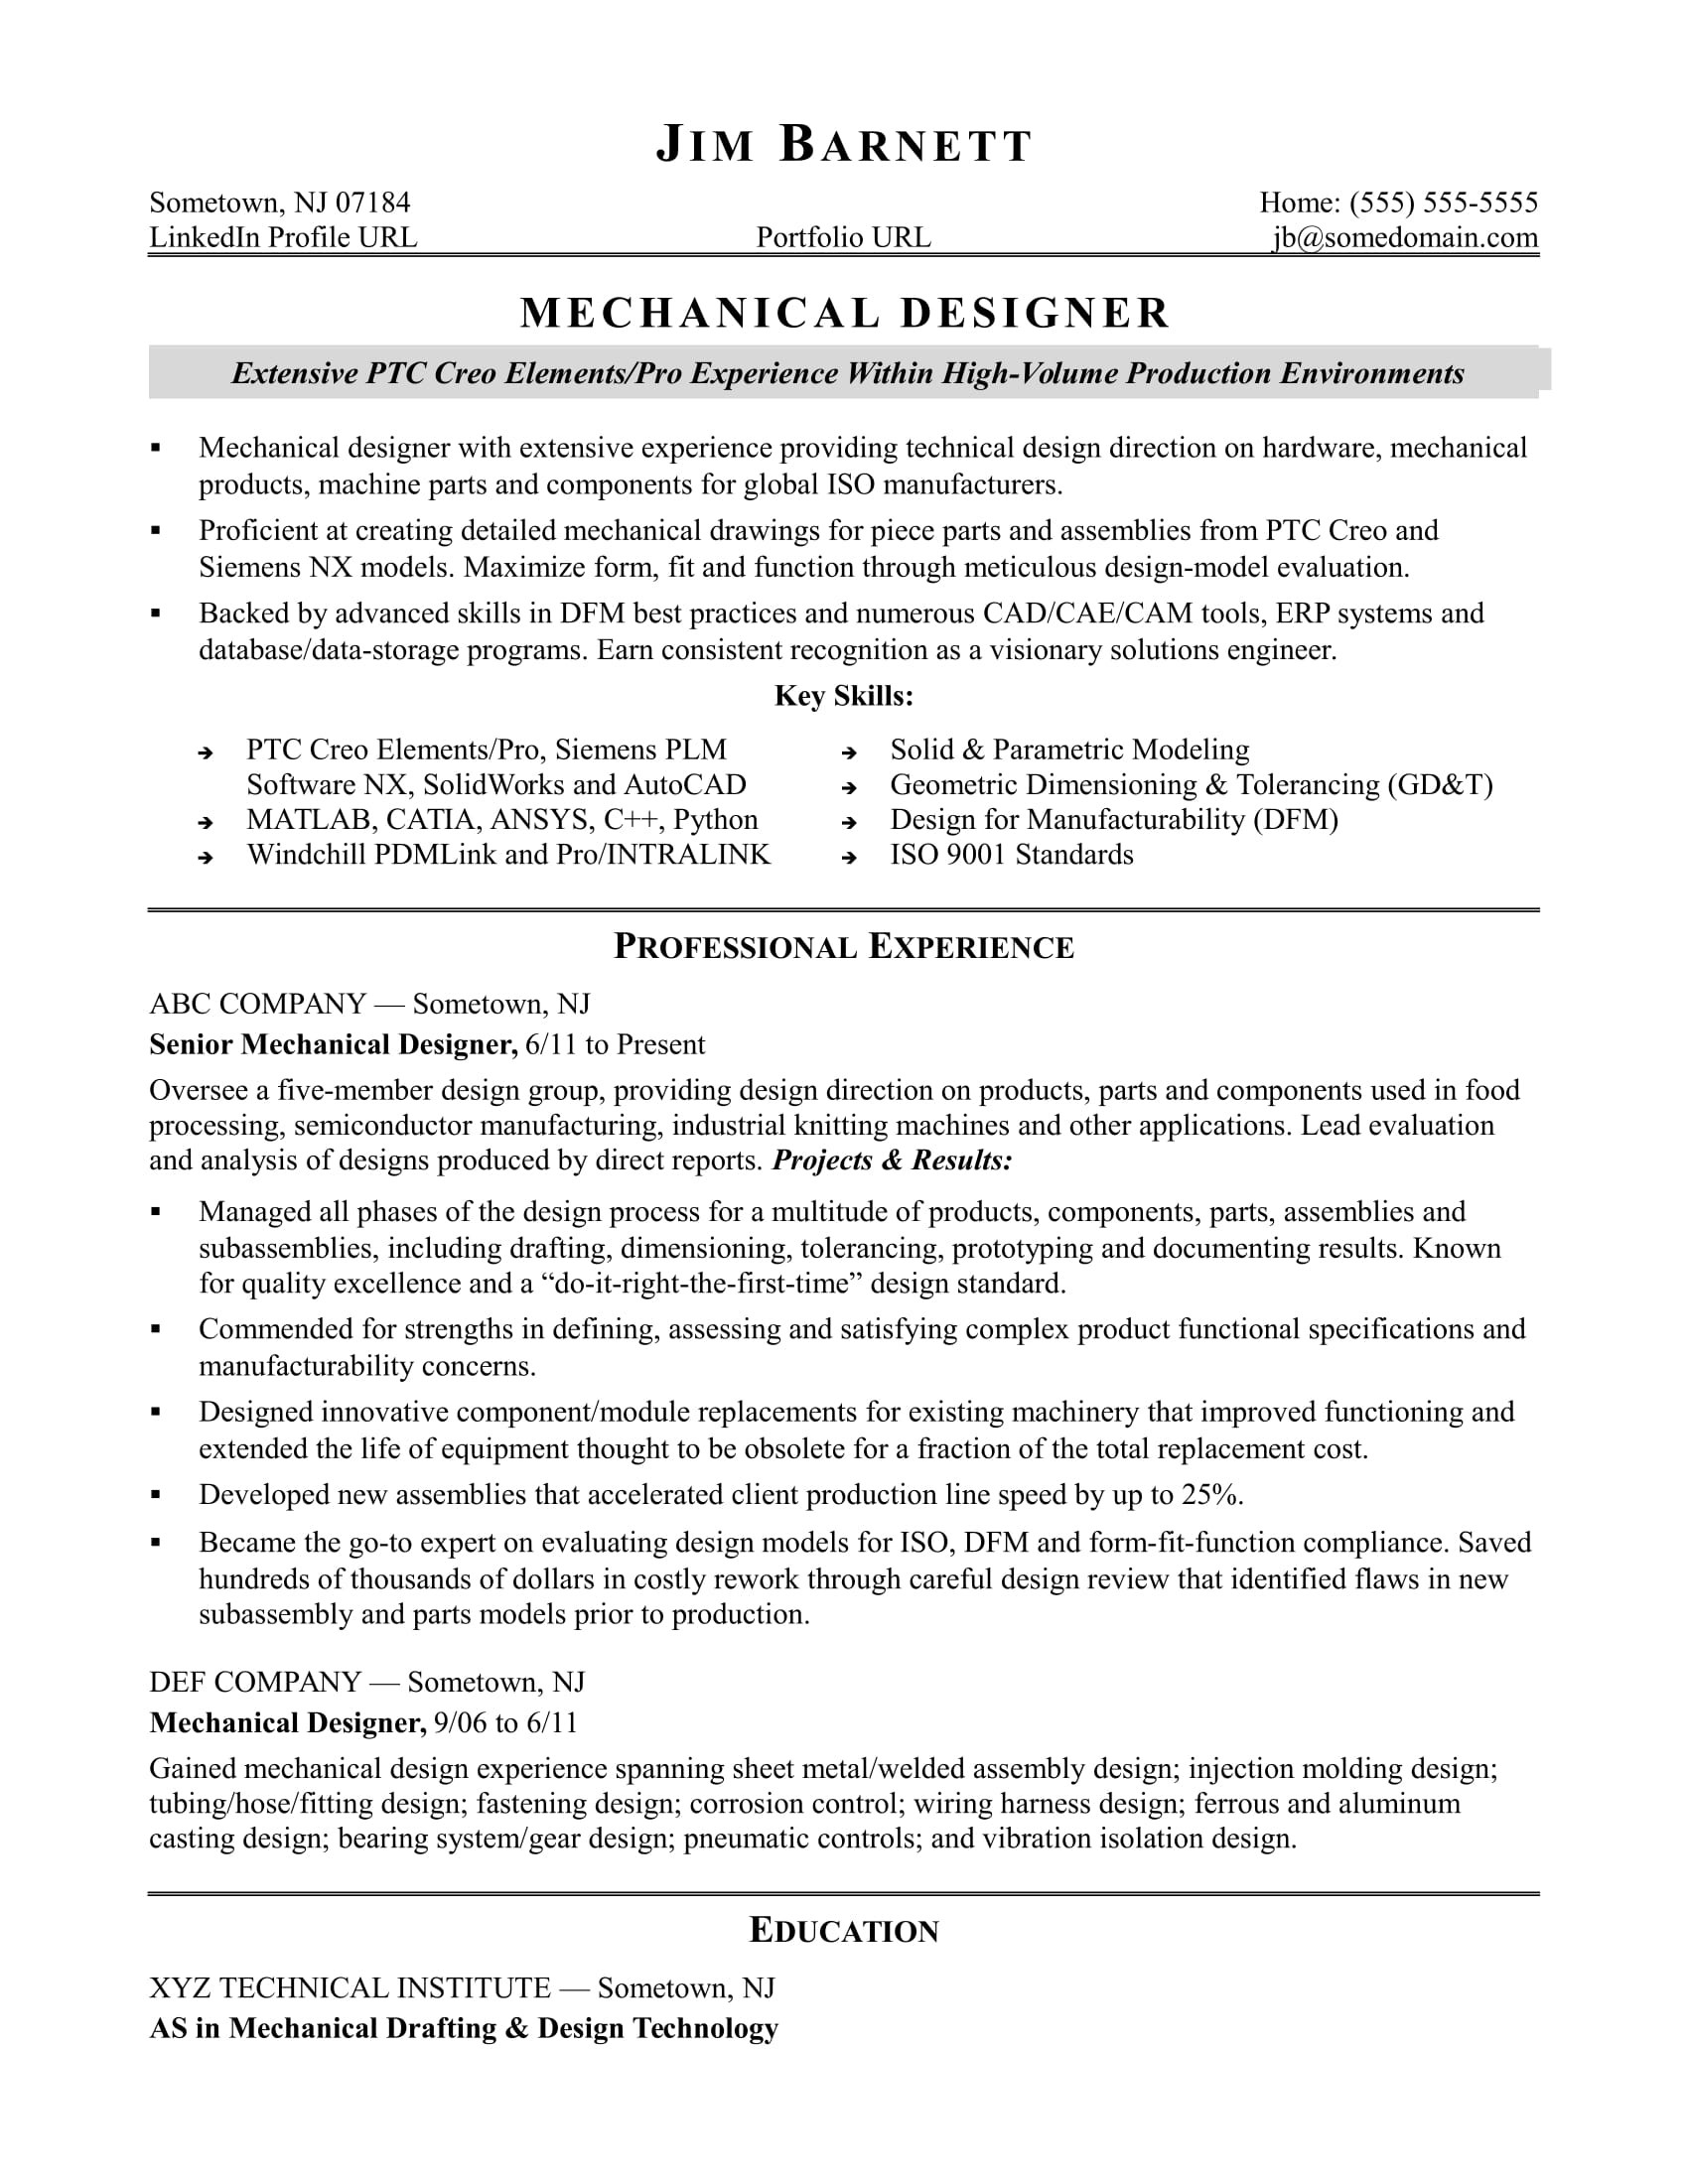 Mechanical Engineering Work Experience Resume Sample Sample Resume for An Experienced Mechanical Designer Monster.com